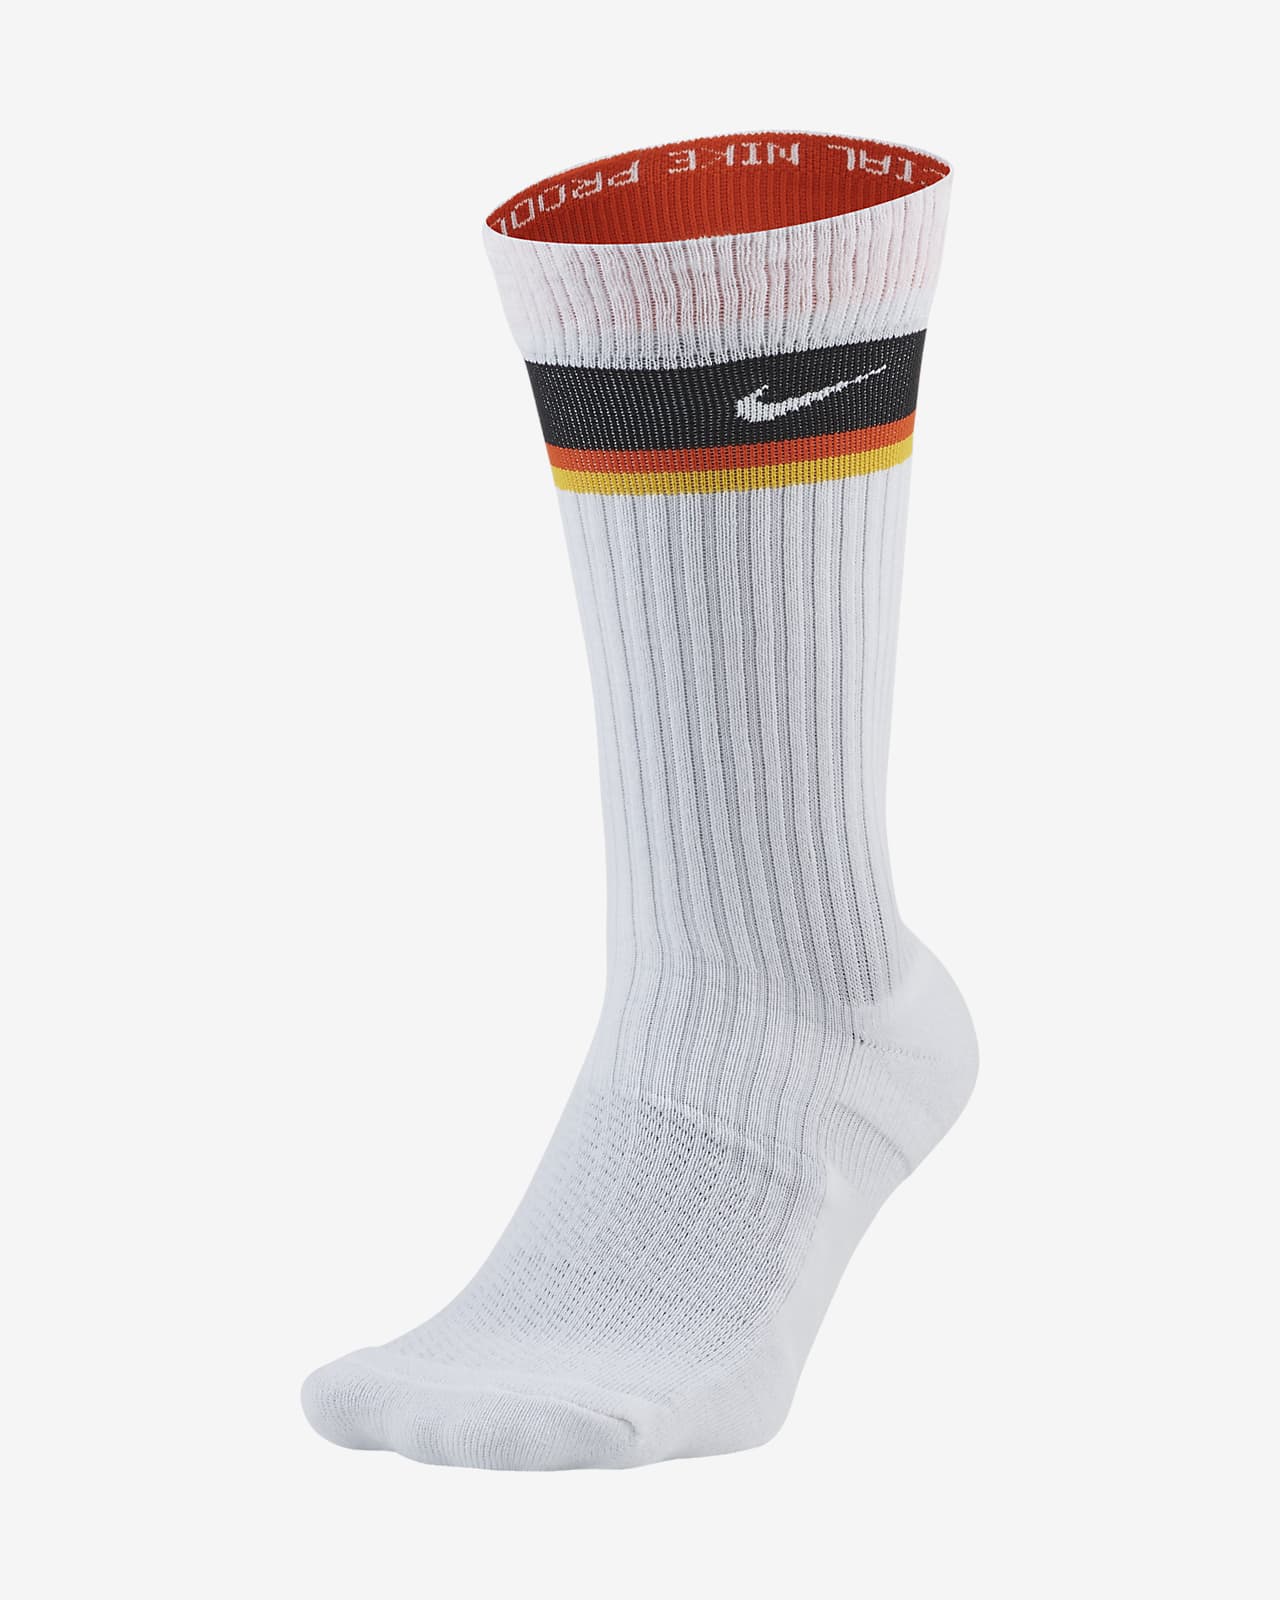 Nike SNKR SOX Rayguns Basketball Crew Socks